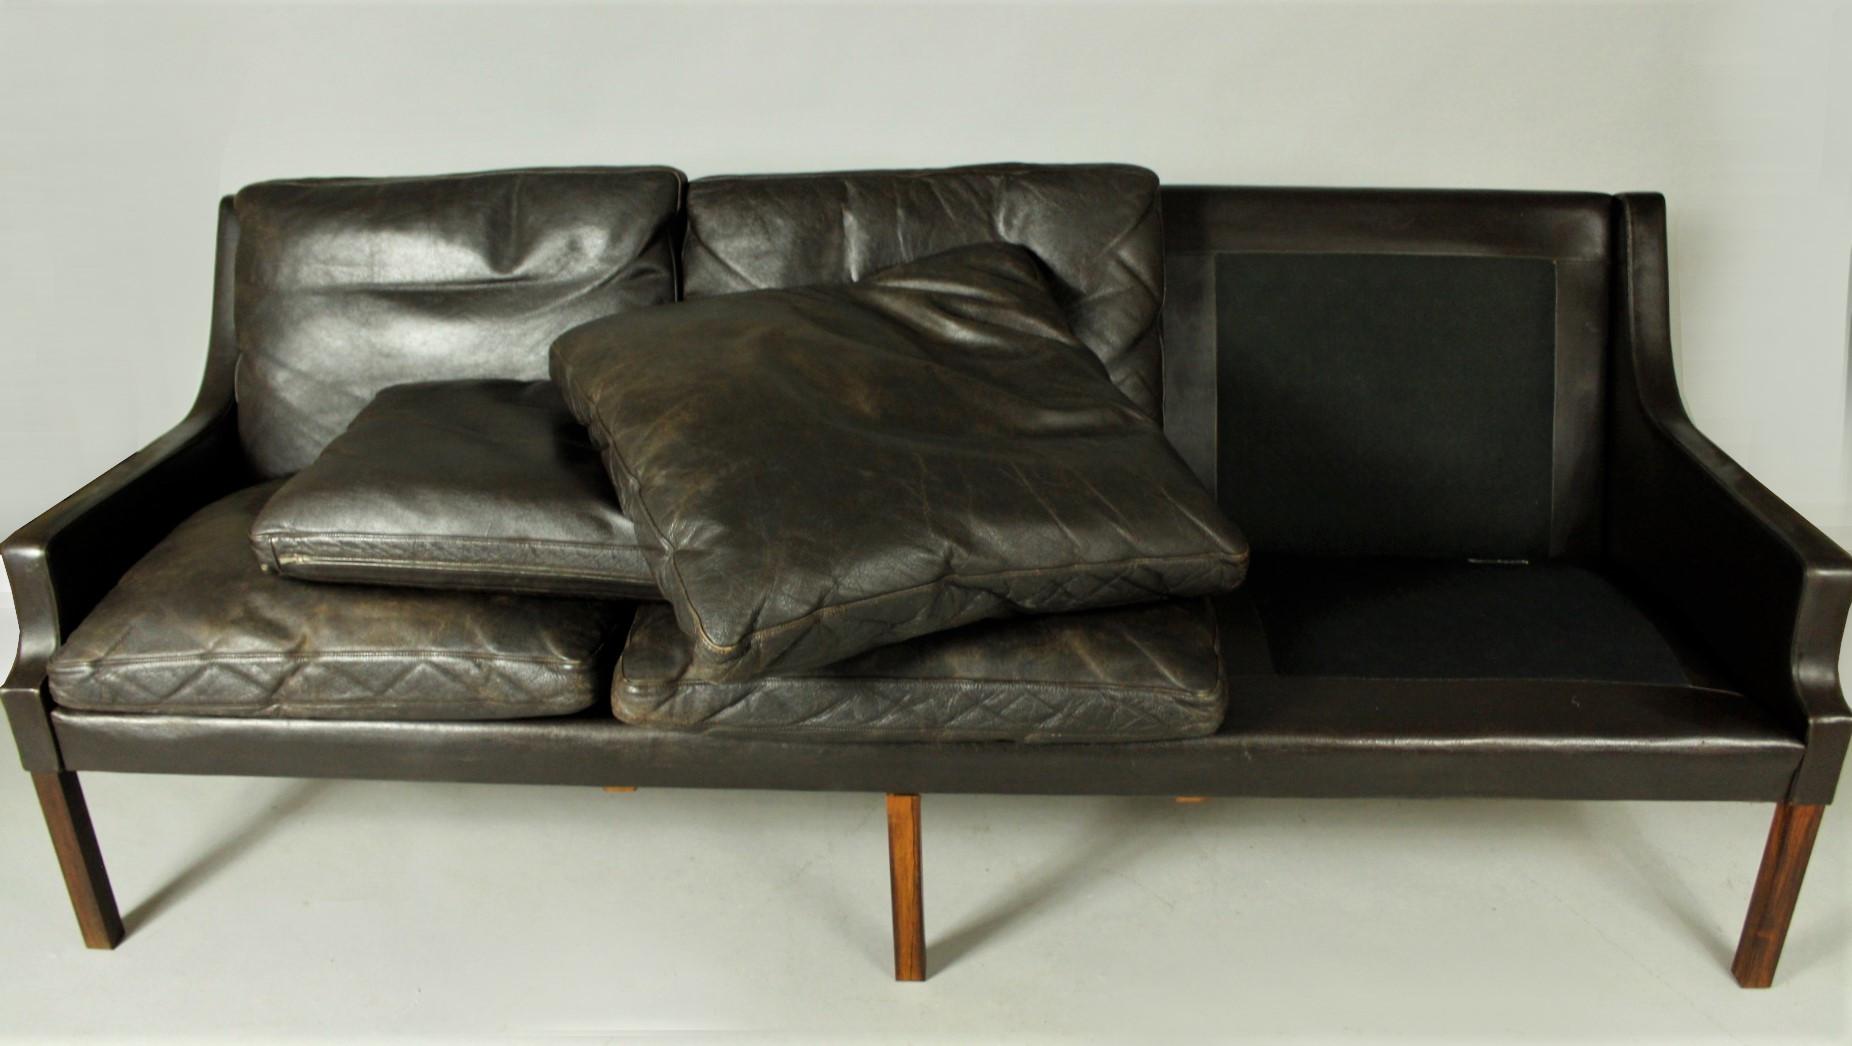 Scandinavian Modern 1960s Leather Sofa by Rud Thygesen for AS Vejen Polstermøbelfabrik, Denmark